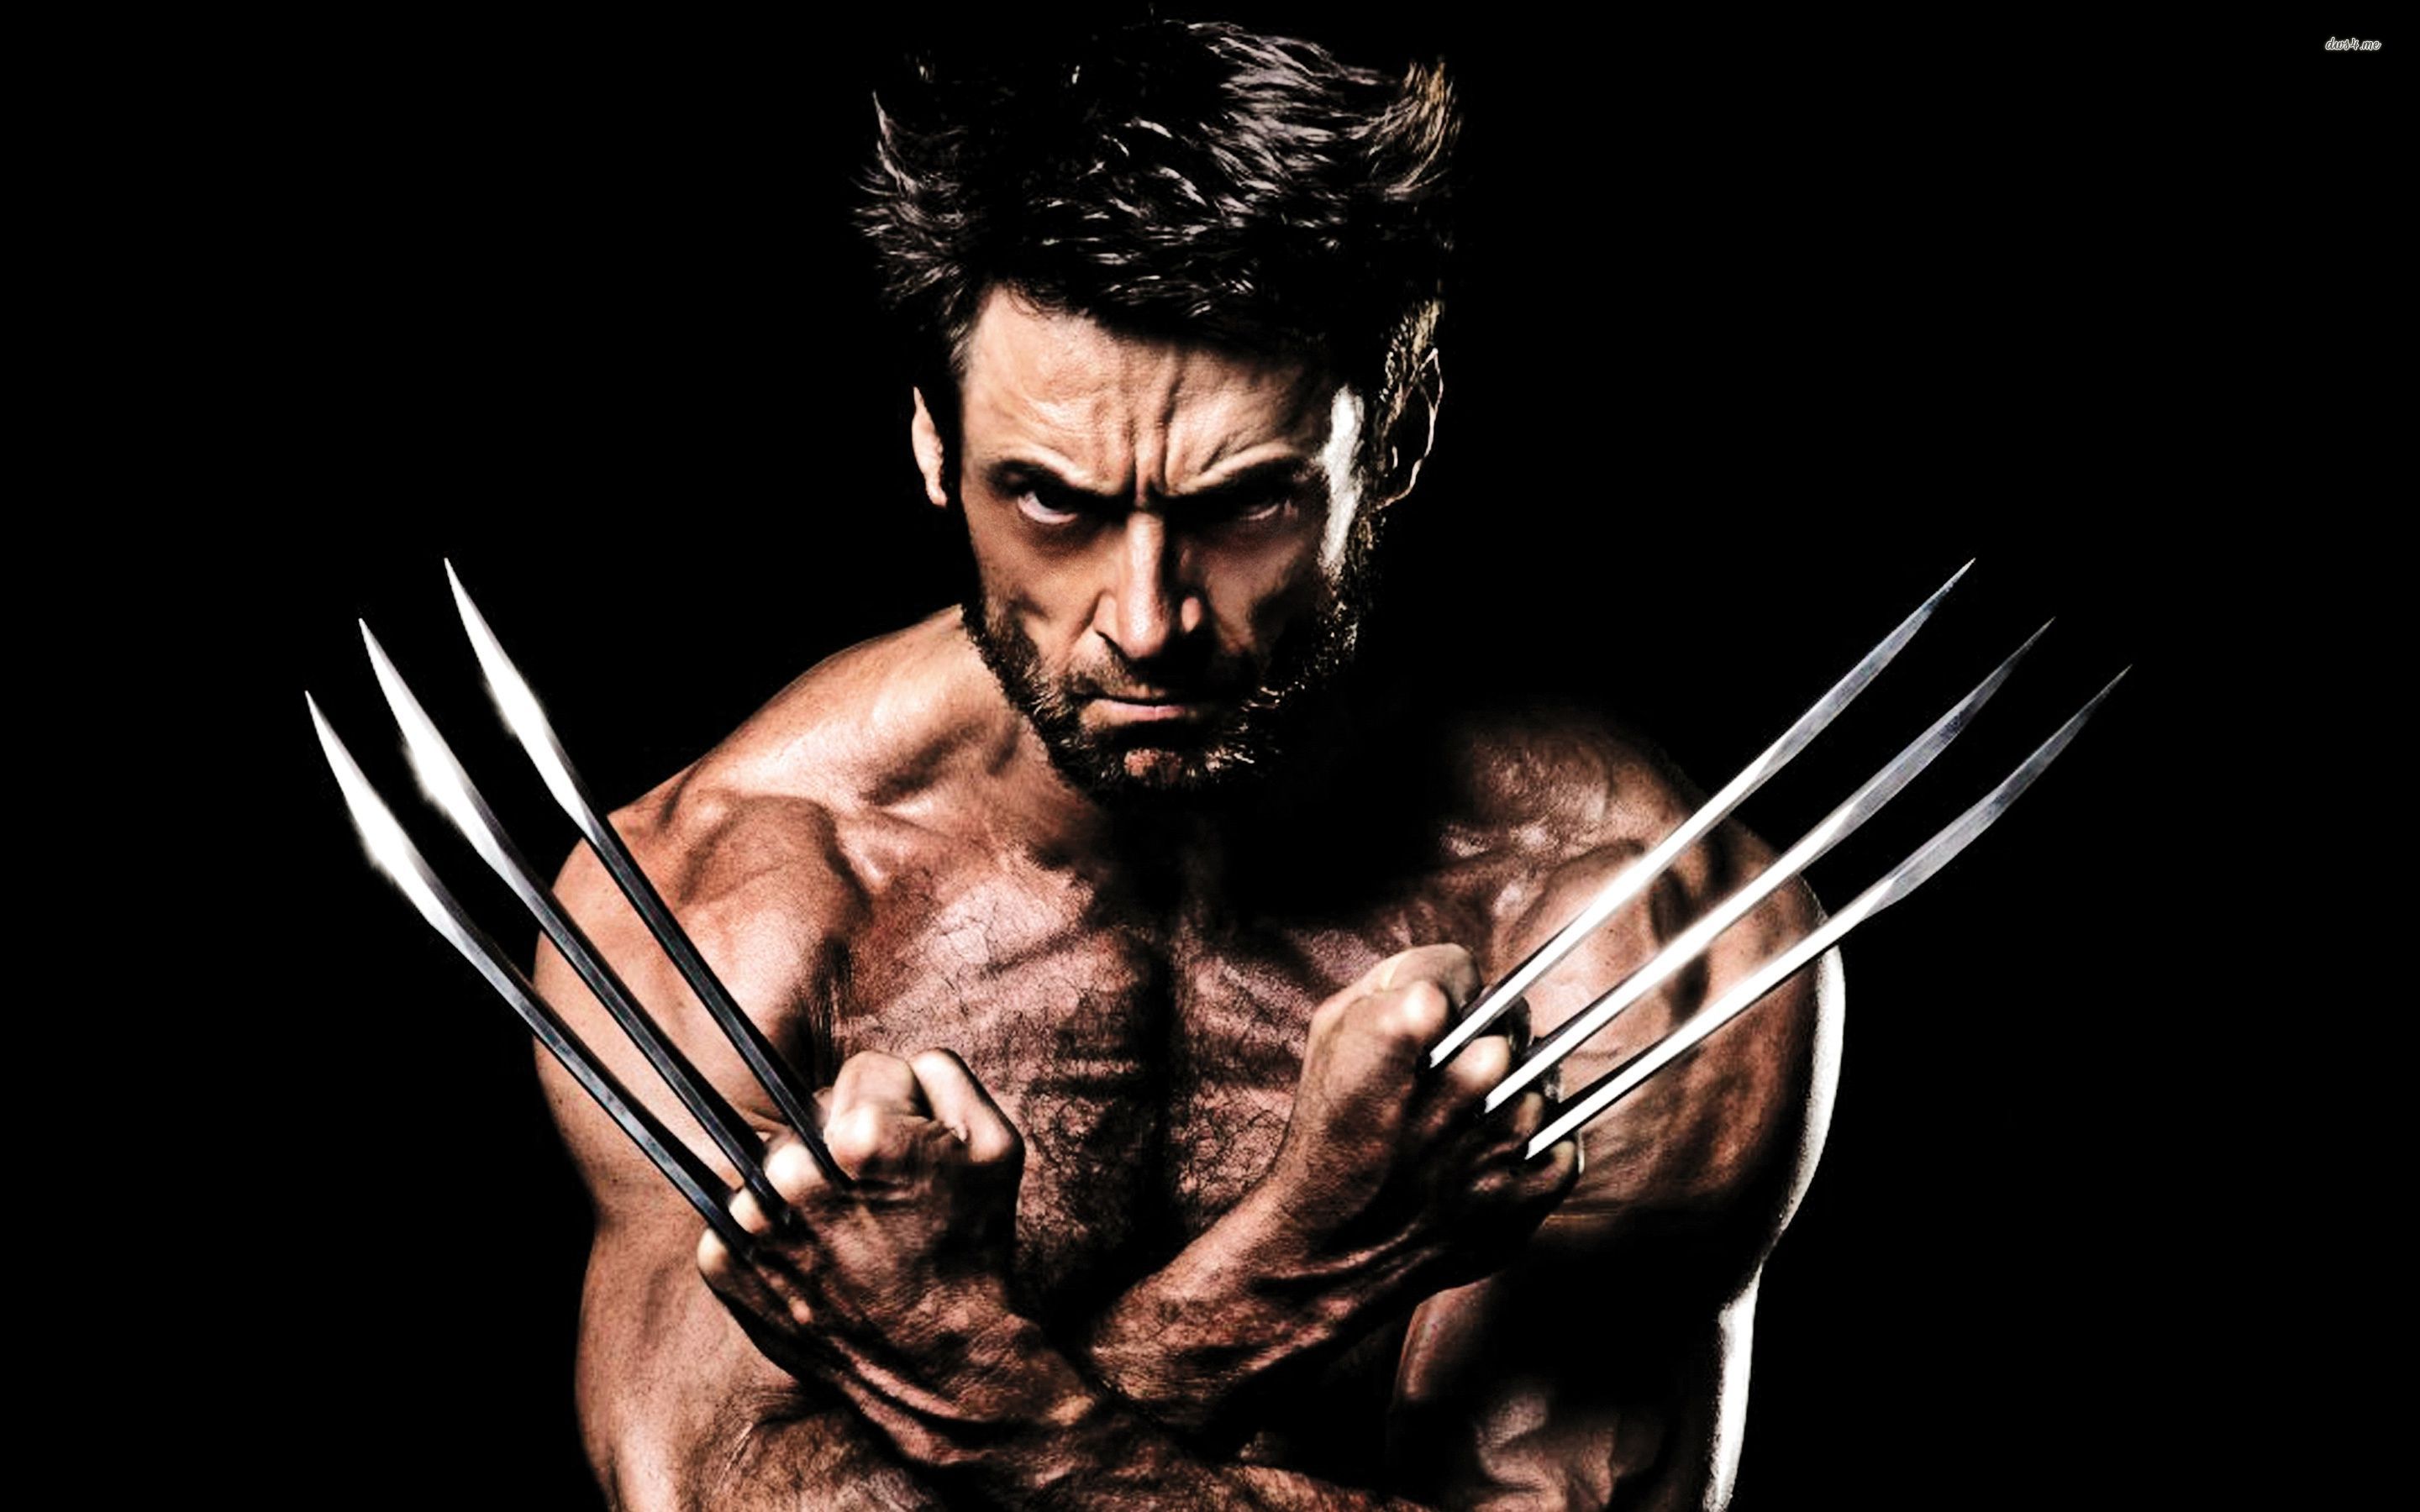 FeyeCon Intelliplant helps you regrow skin and bone like Wolverine